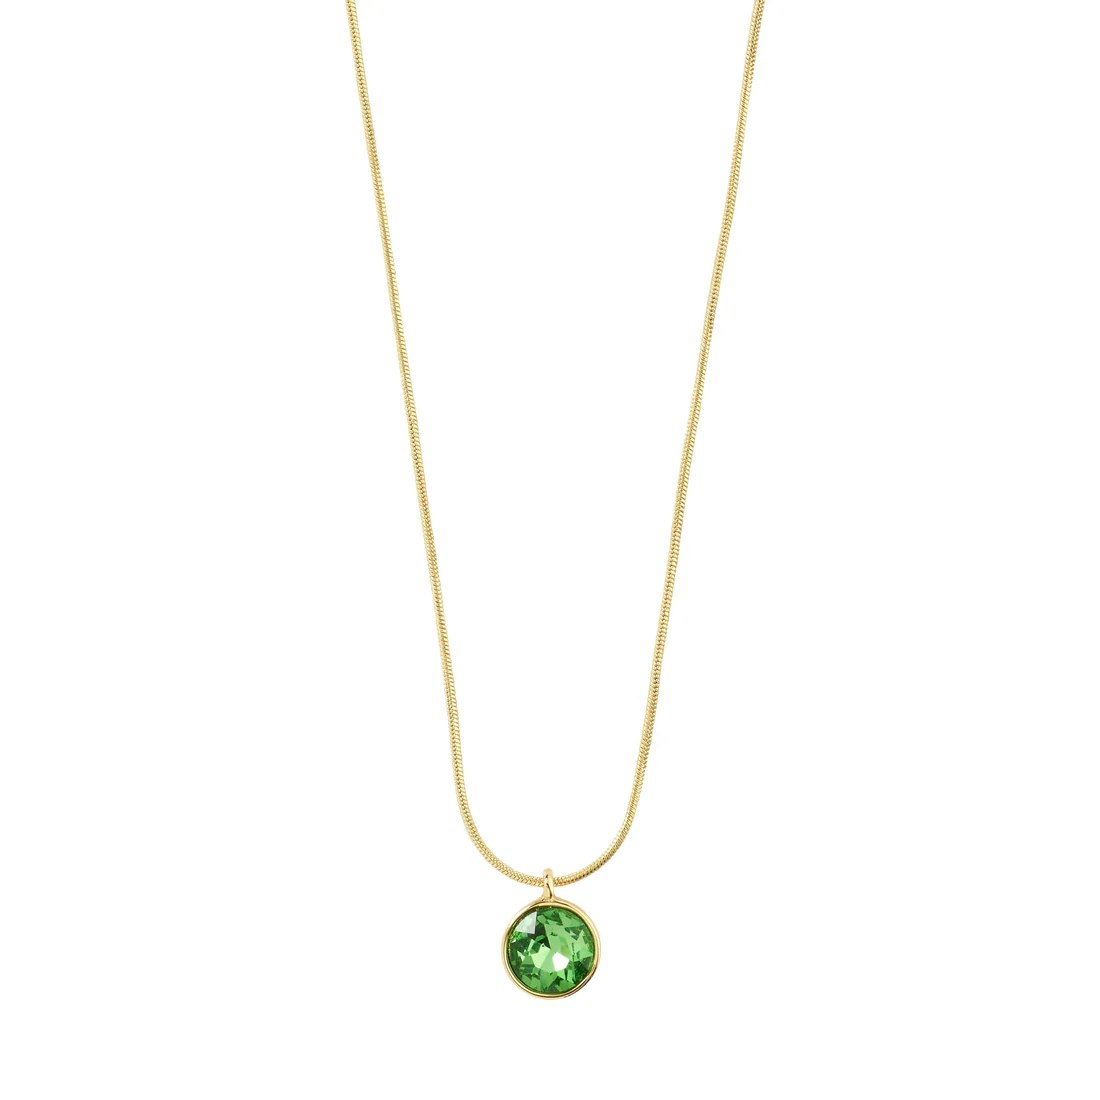 Callie Crystal Pendant Necklace Green/Gold Pilgrim